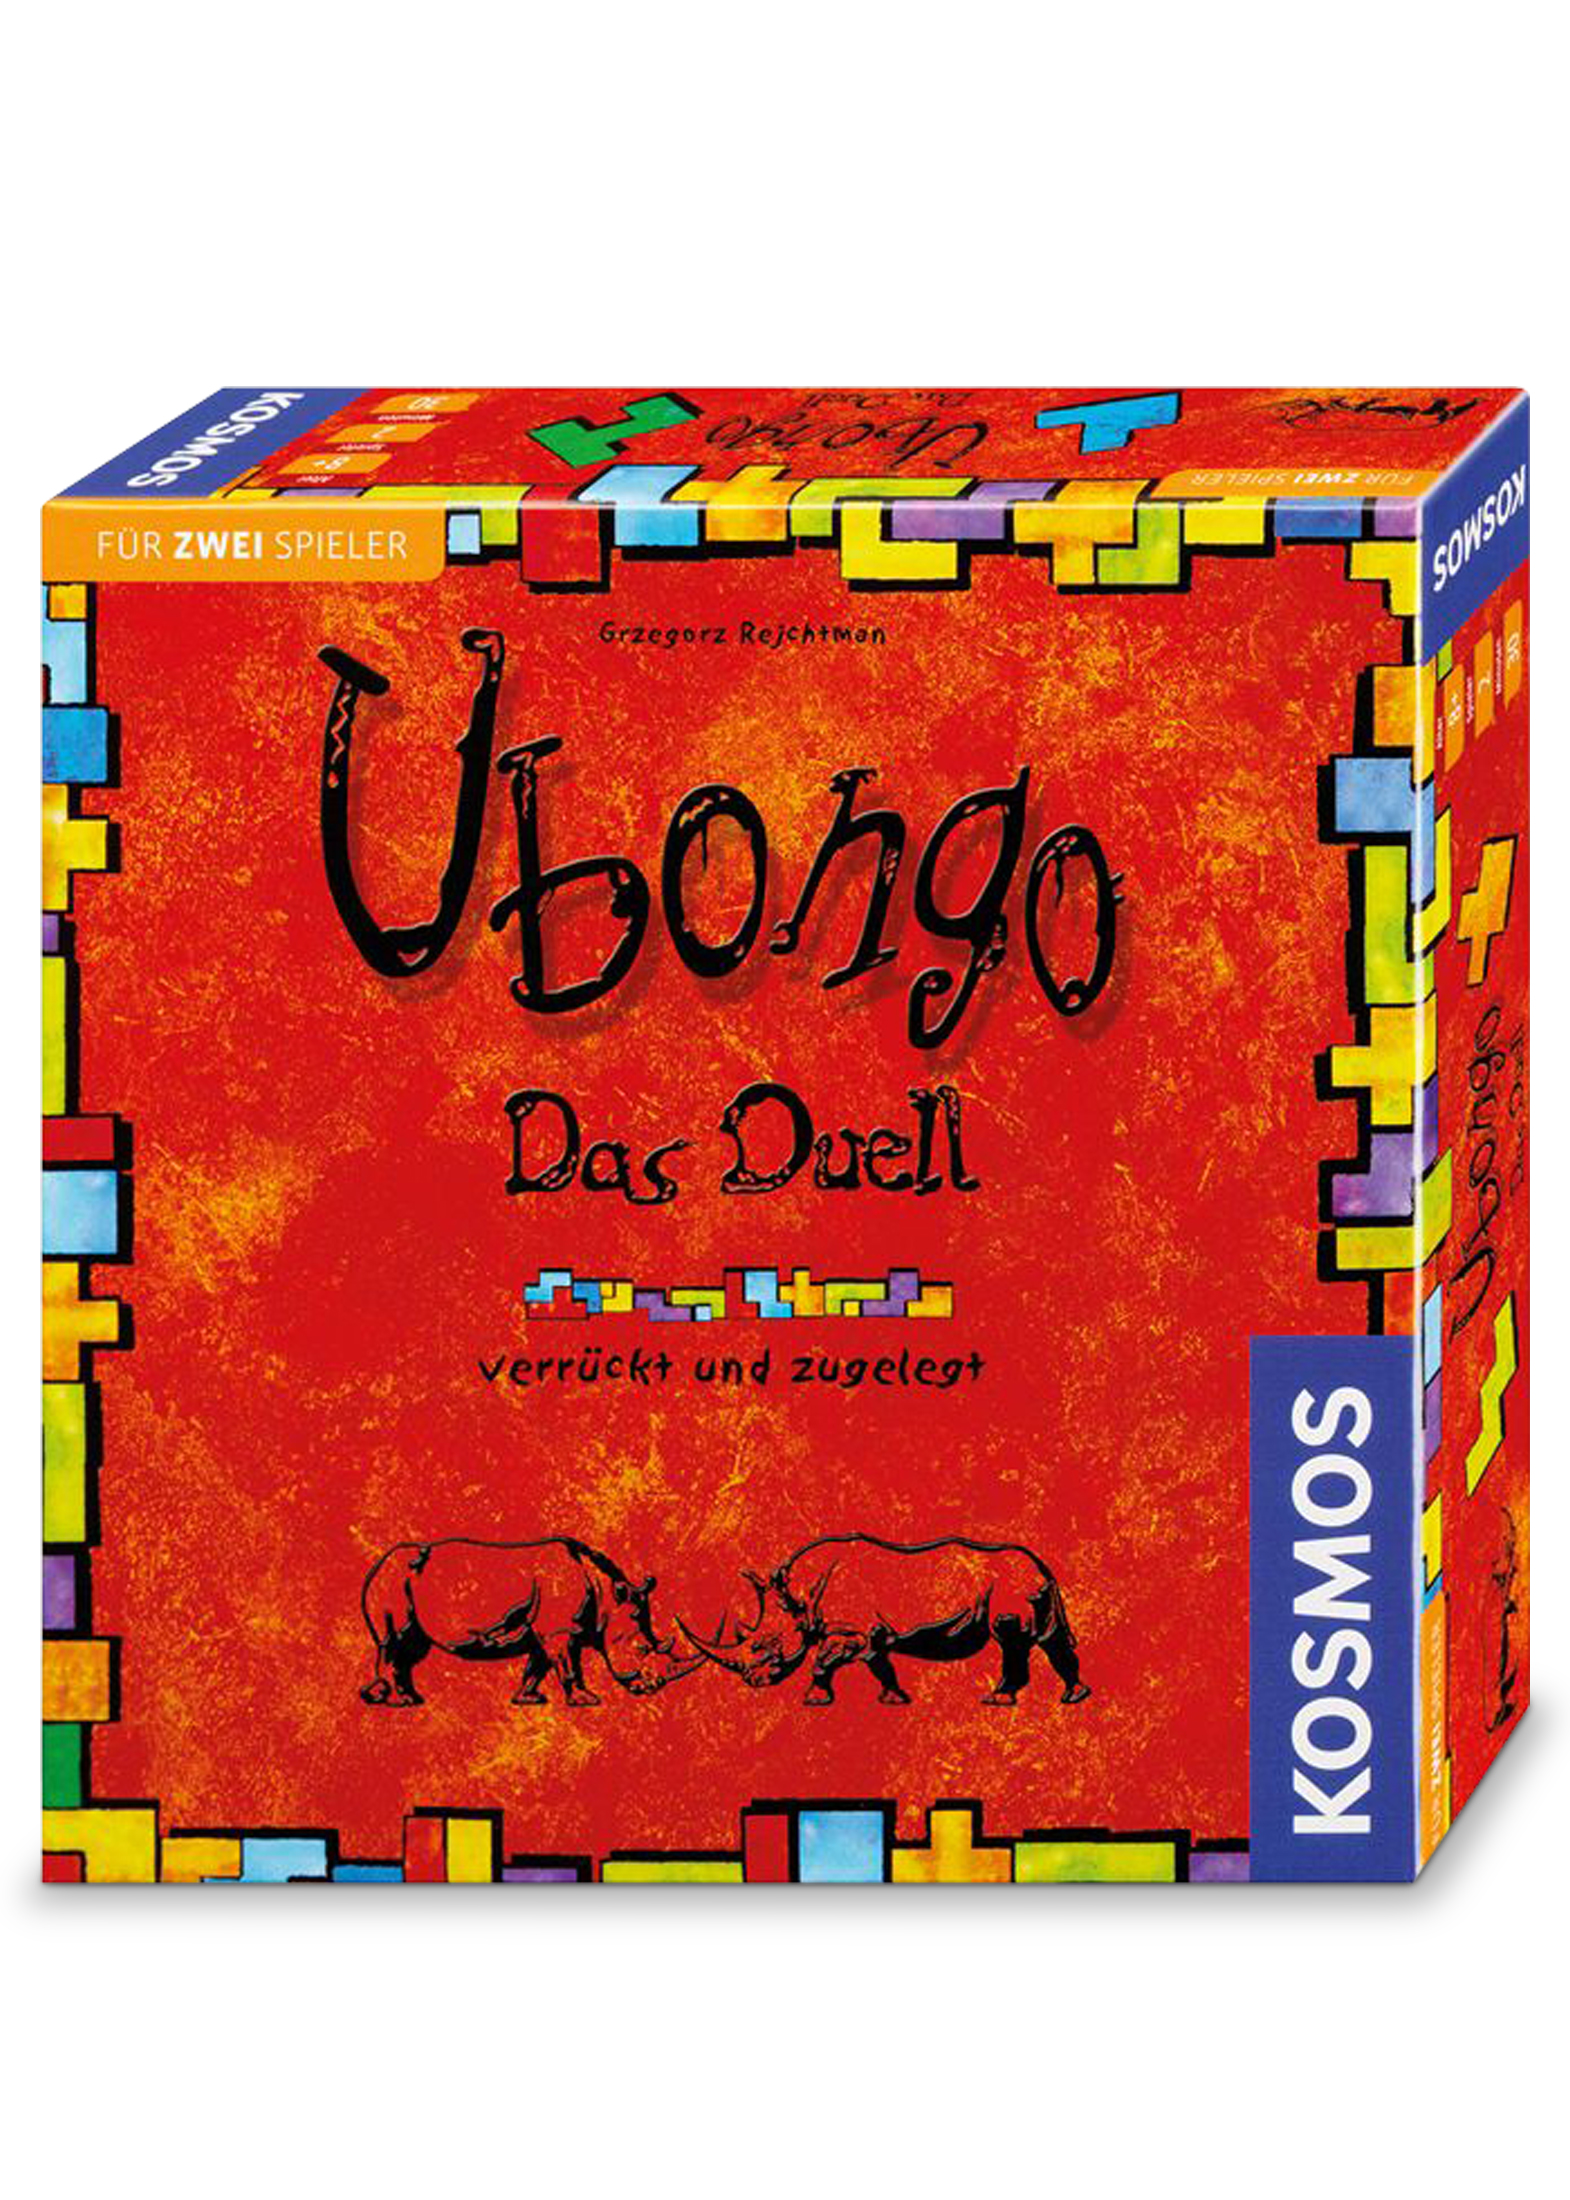 Das Duell Ubongo 